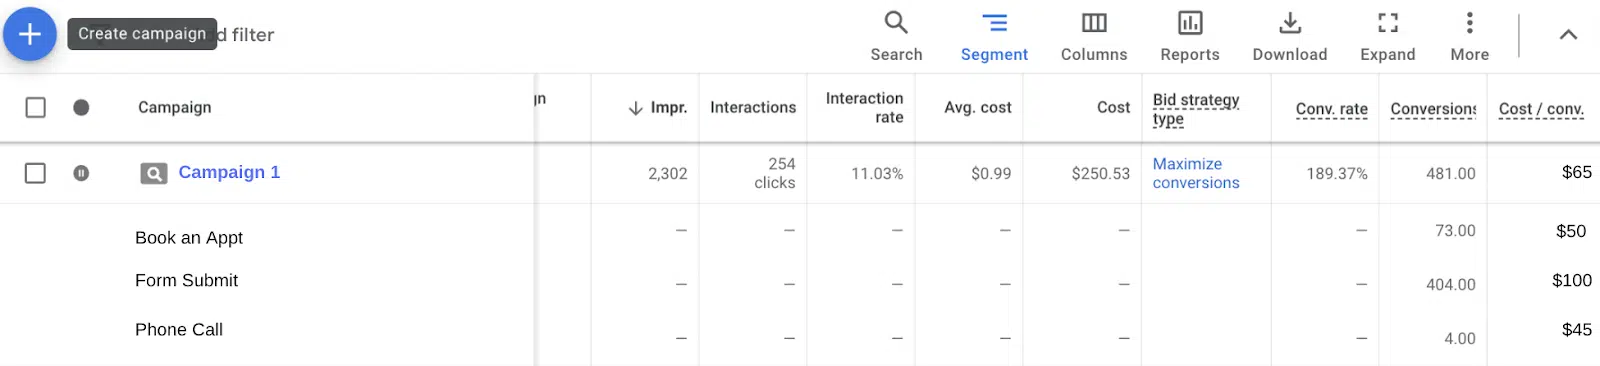 Google Ads metrics per campaign